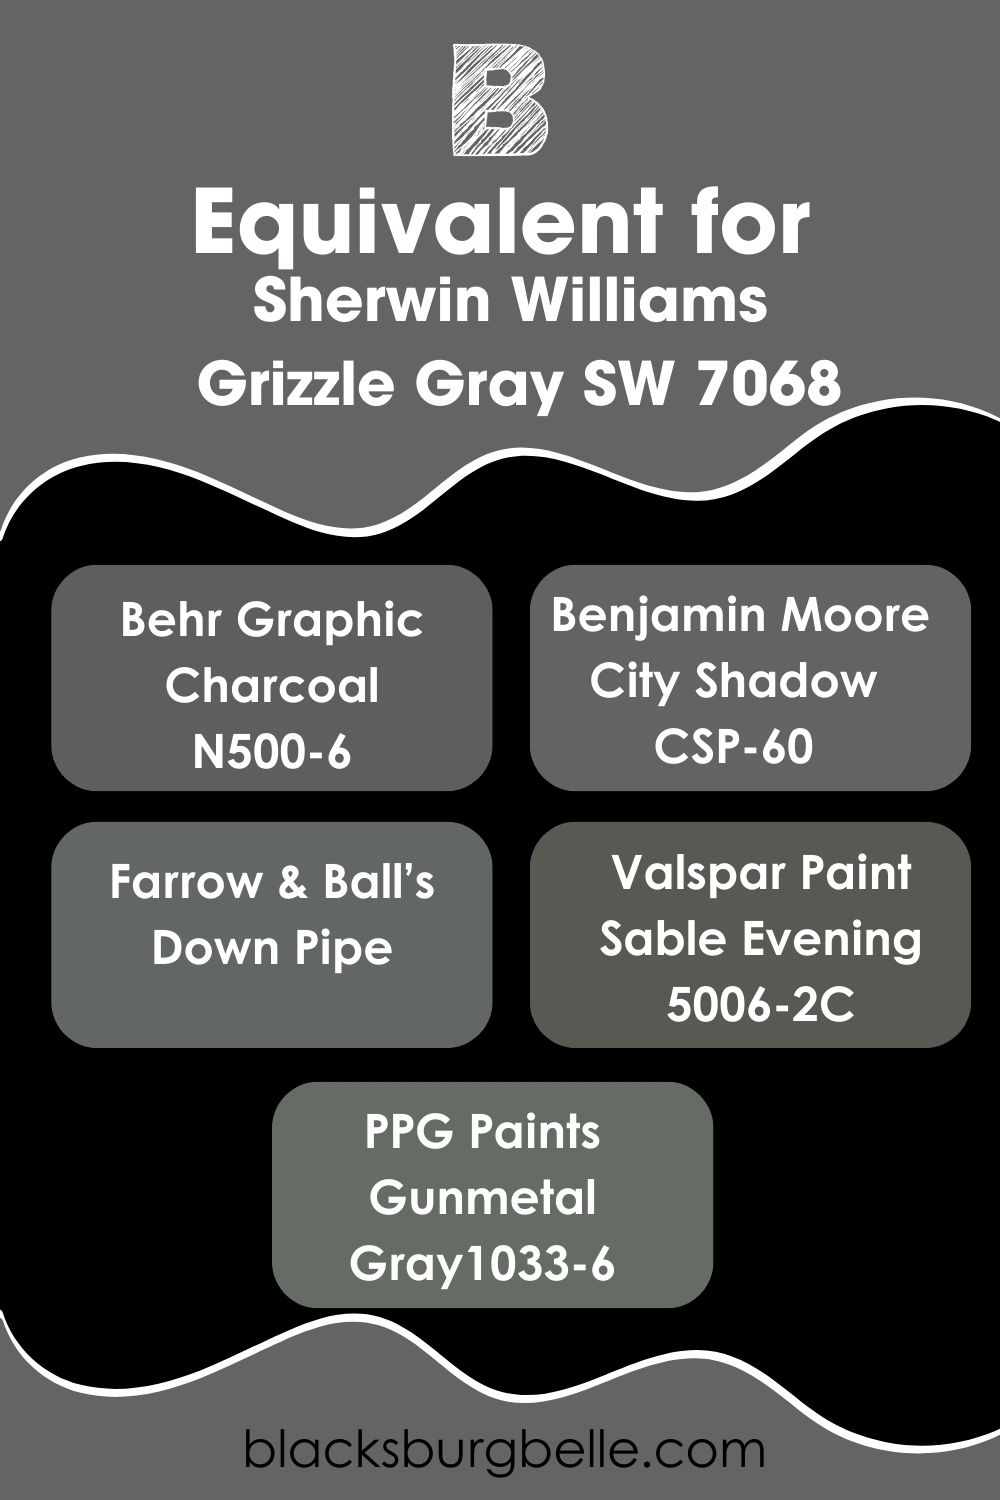 Grizzle Gray SW 7068